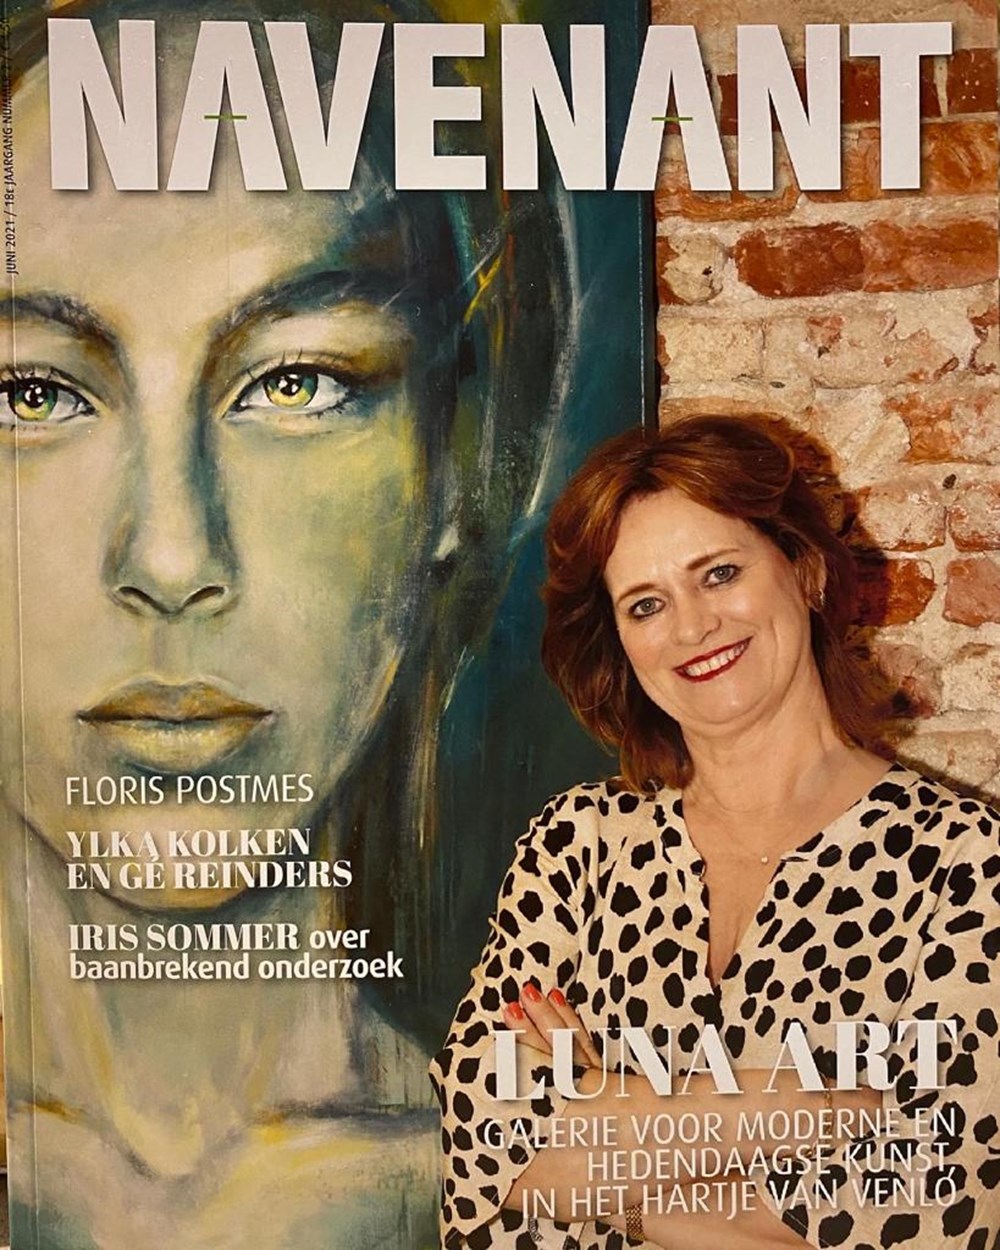 Navenant magazine